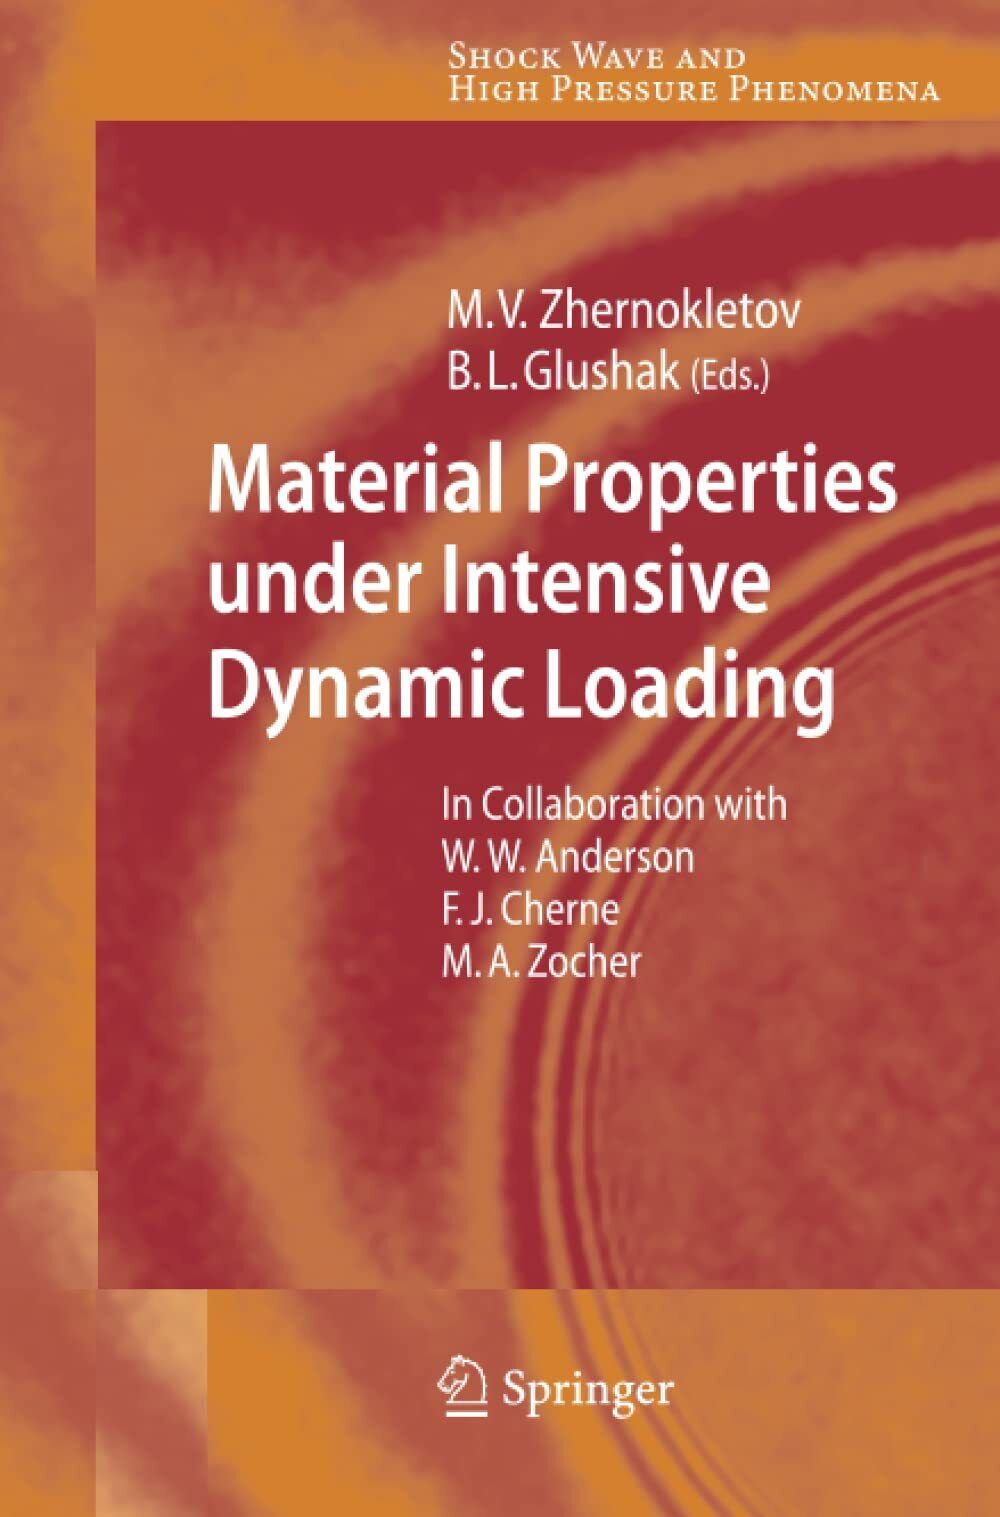 Material Properties under Intensive Dynamic Loading - Springer, 2010